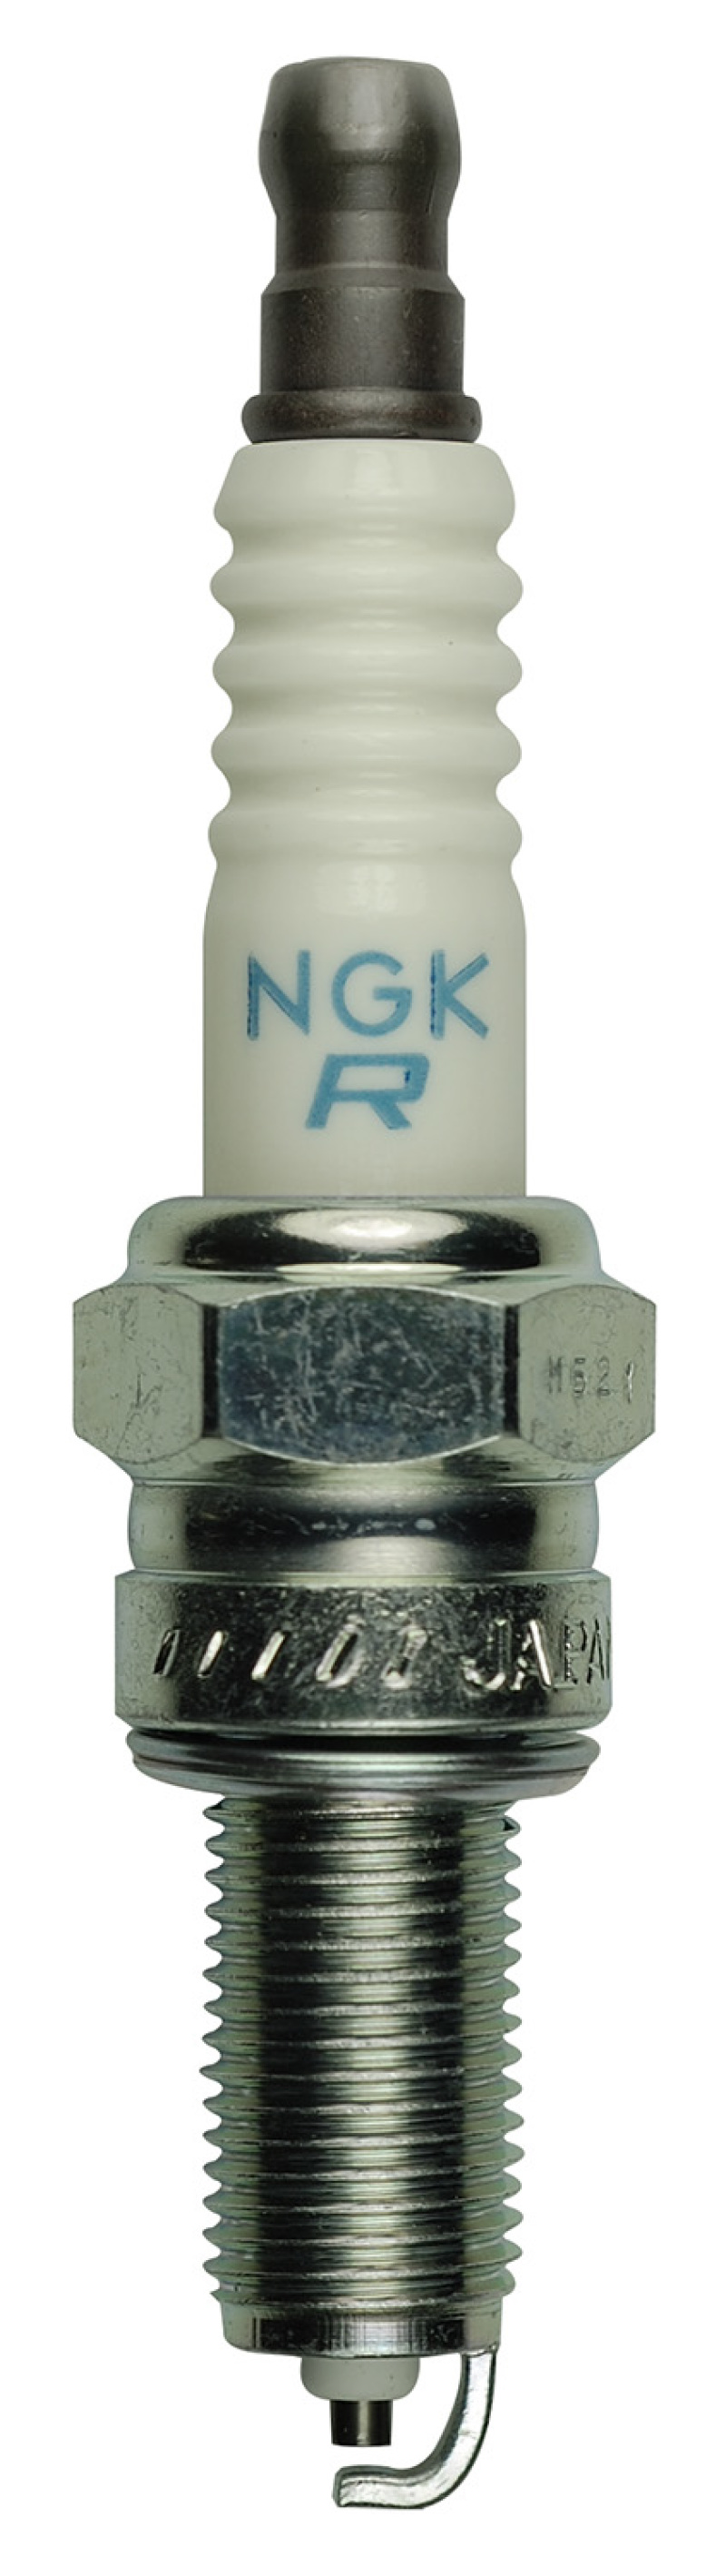 NGK Standard Spark Plug Box of 4 (MR9F) - 95884